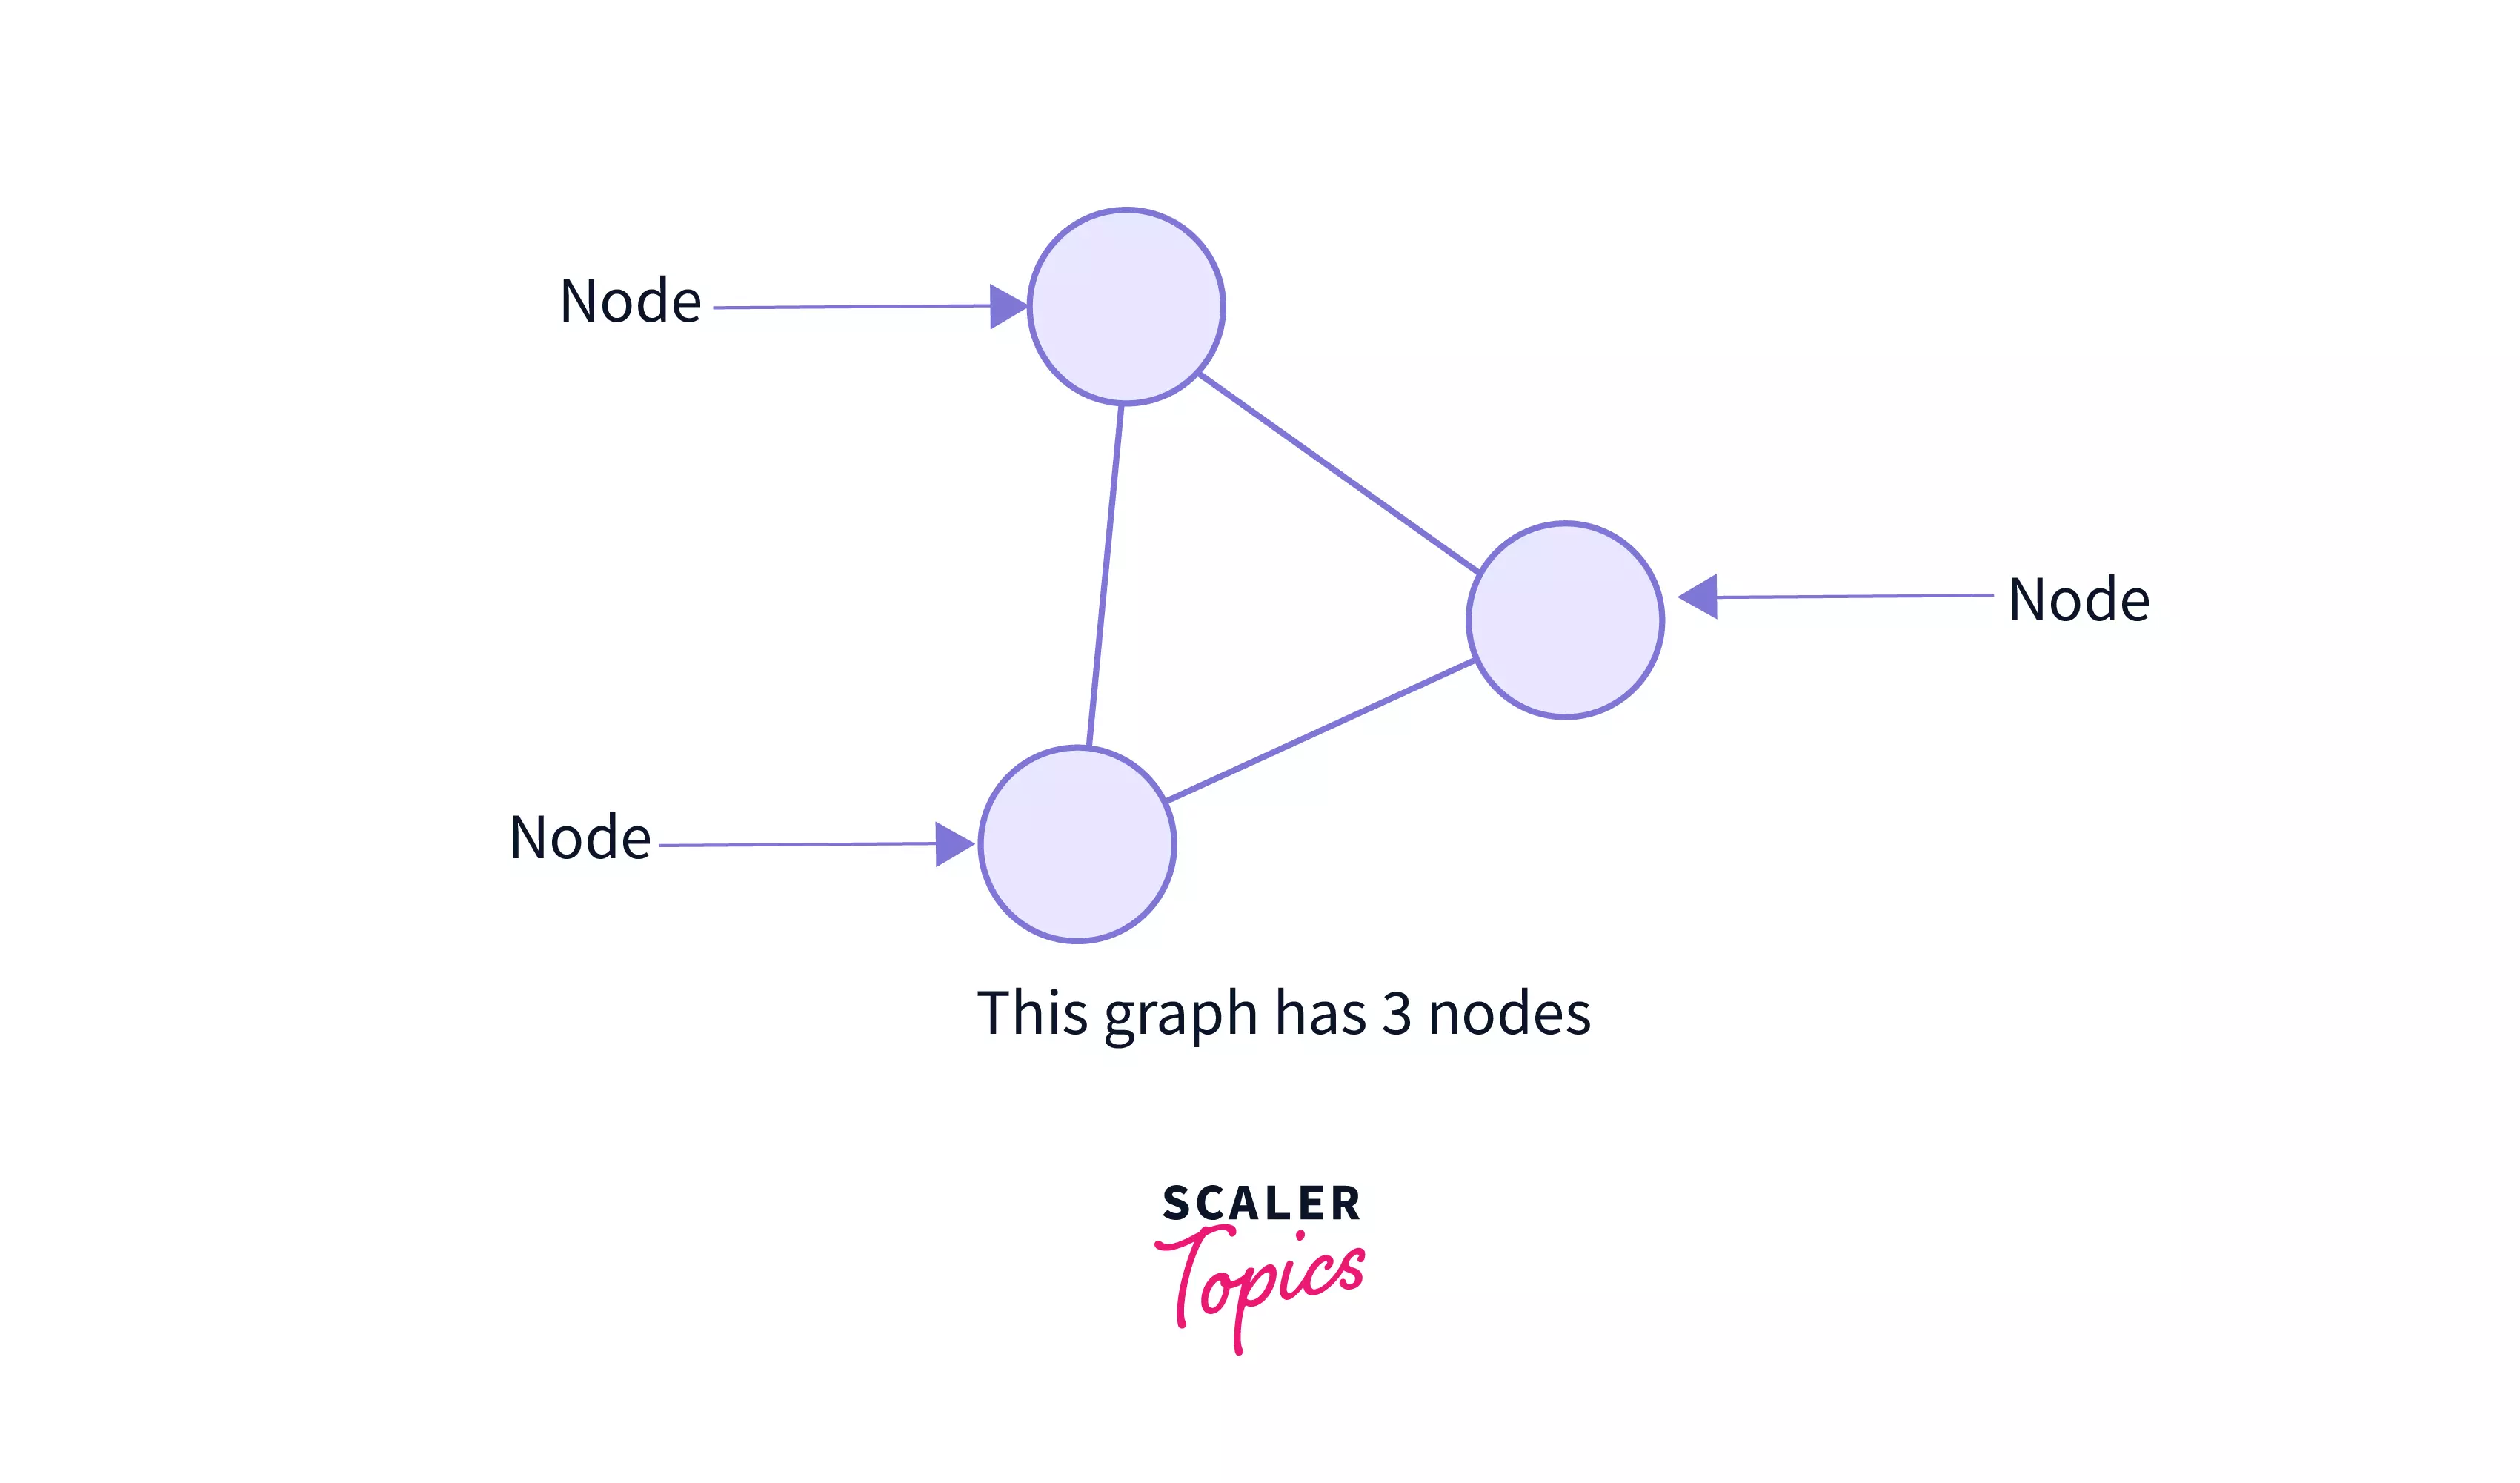 Nodes in a graph